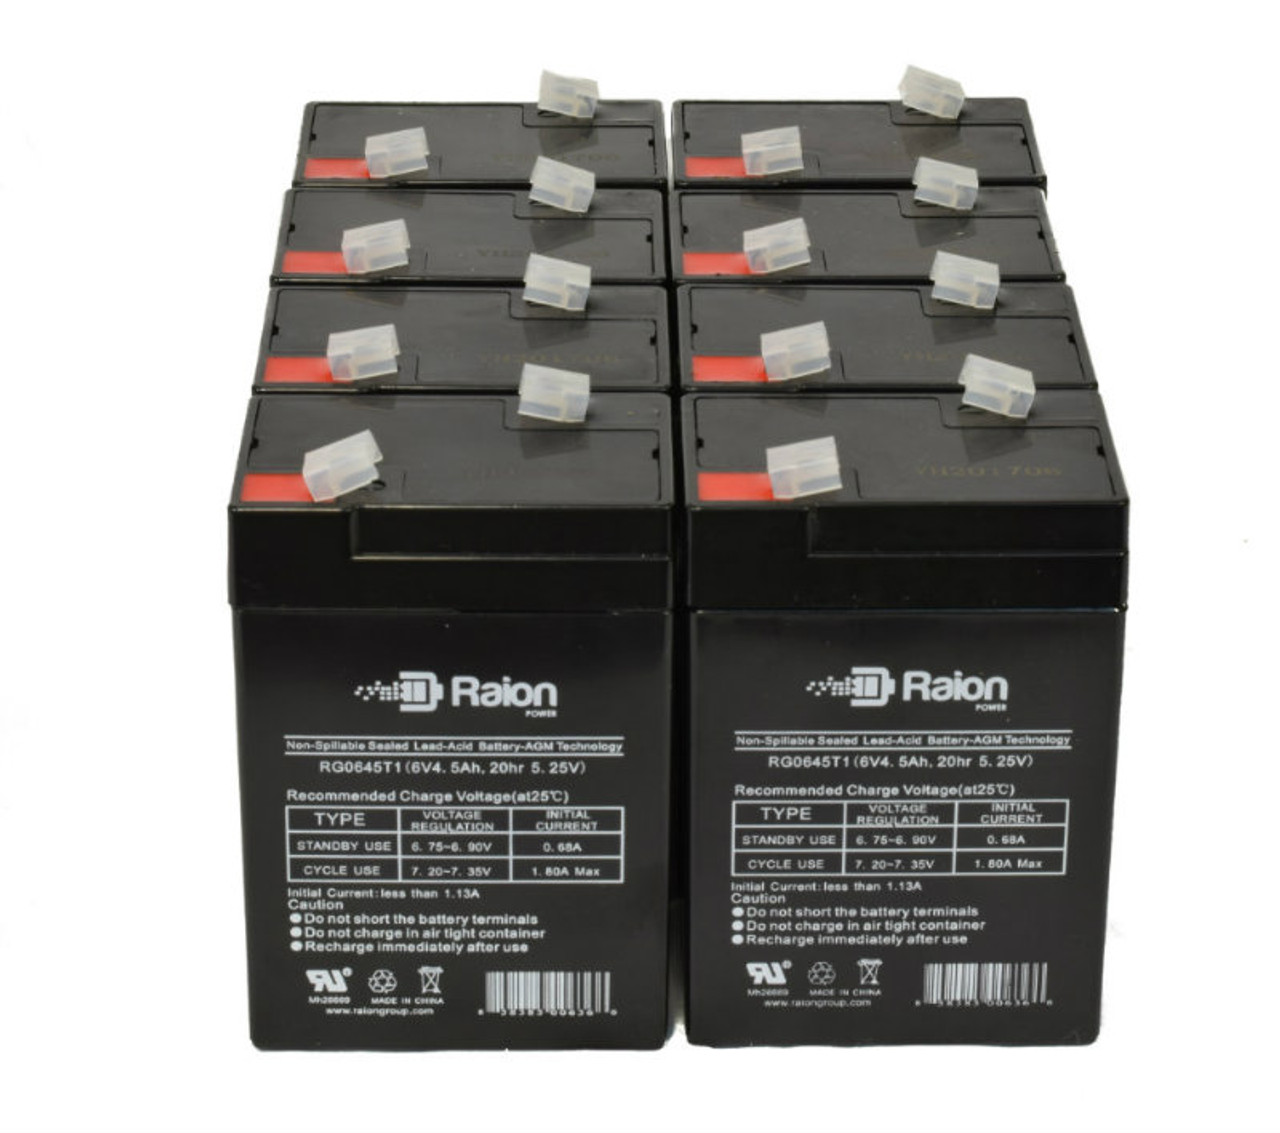 Raion Power 6 Volt 4.5Ah RG0645T1 Replacement Battery for Sonnenschein 103103 - 8 Pack